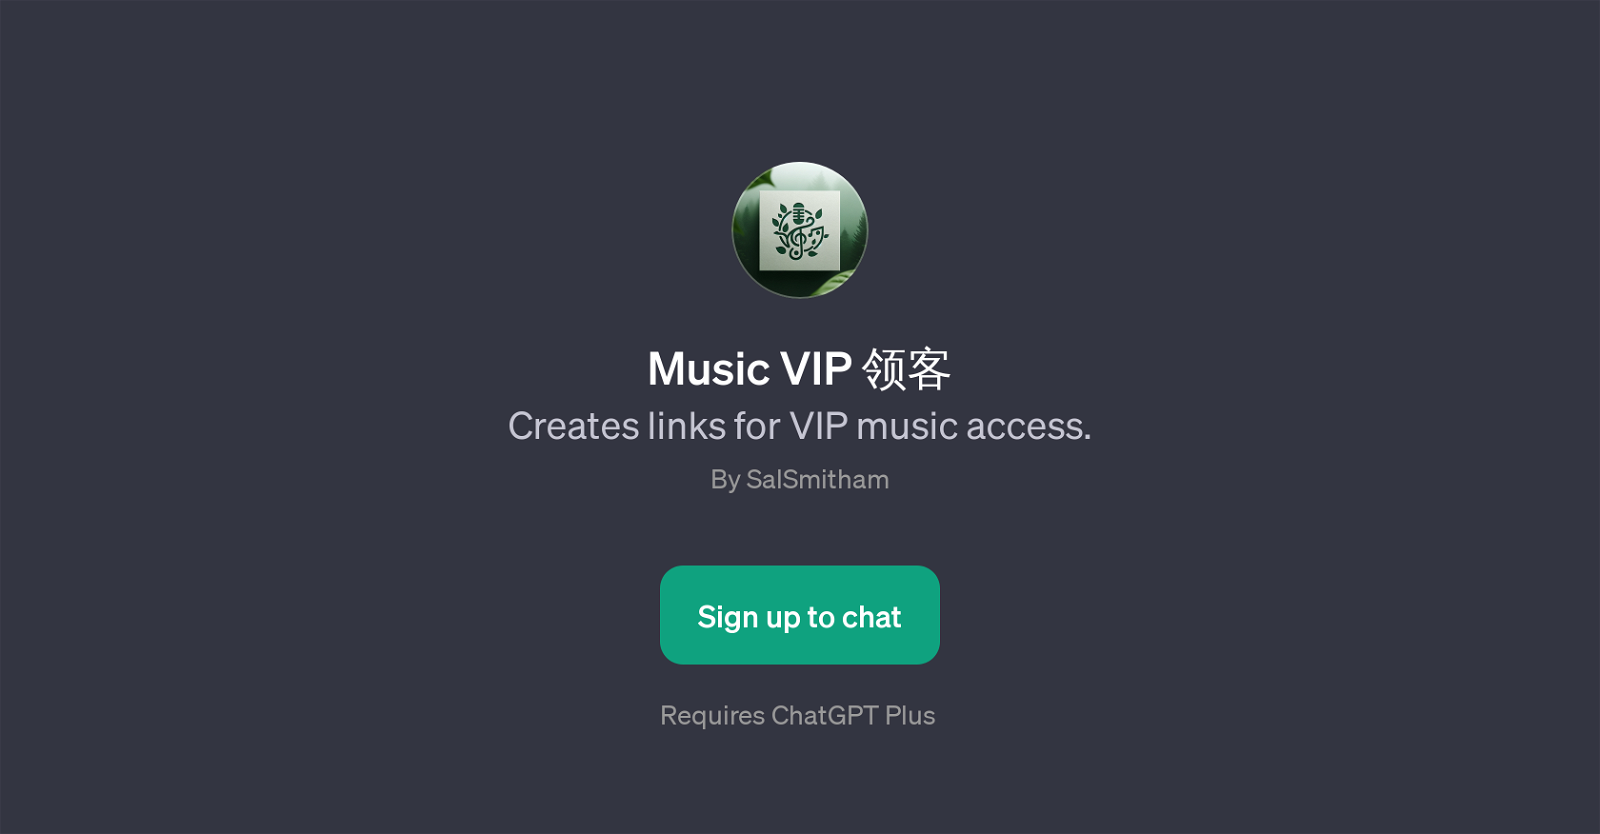 Music VIP website